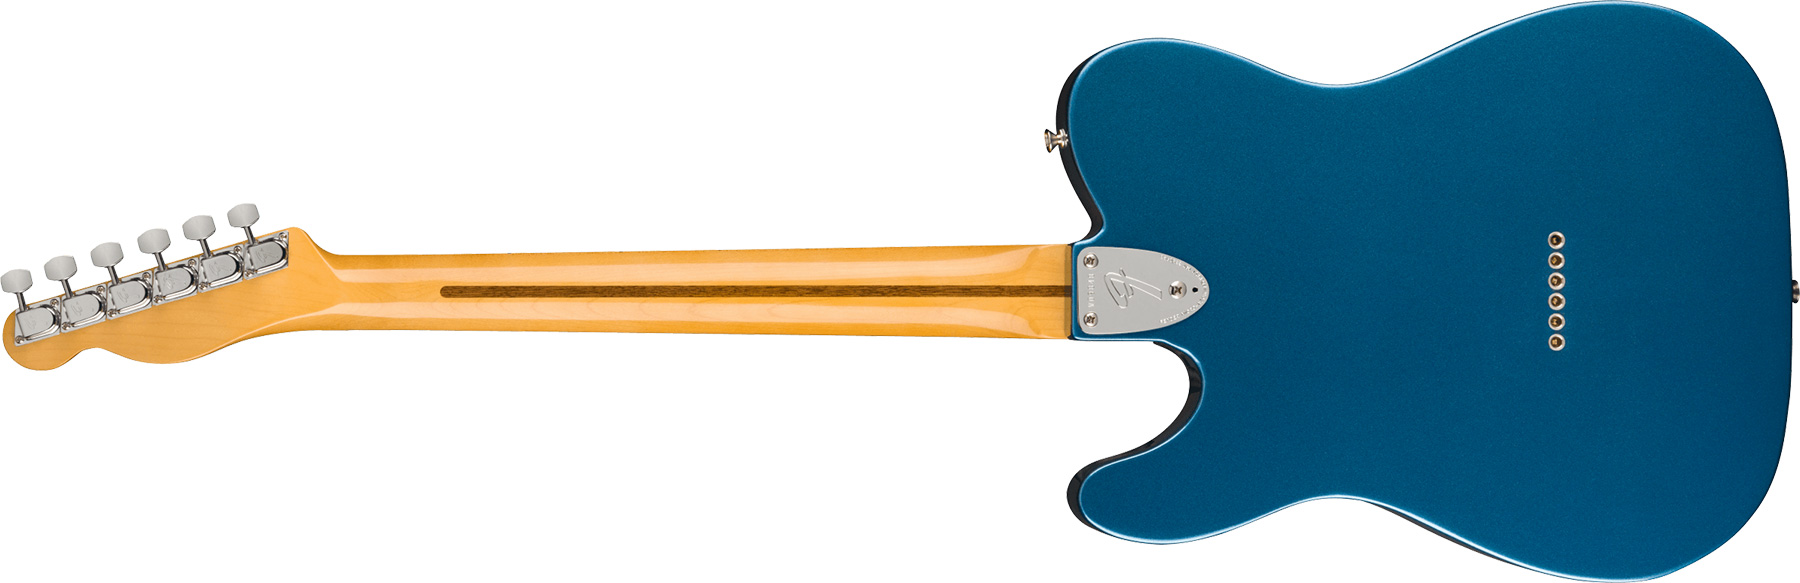 Fender Tele Thinline 1972 American Vintage Ii Usa 2h Ht Mn - Lake Placid Blue - Televorm elektrische gitaar - Variation 1